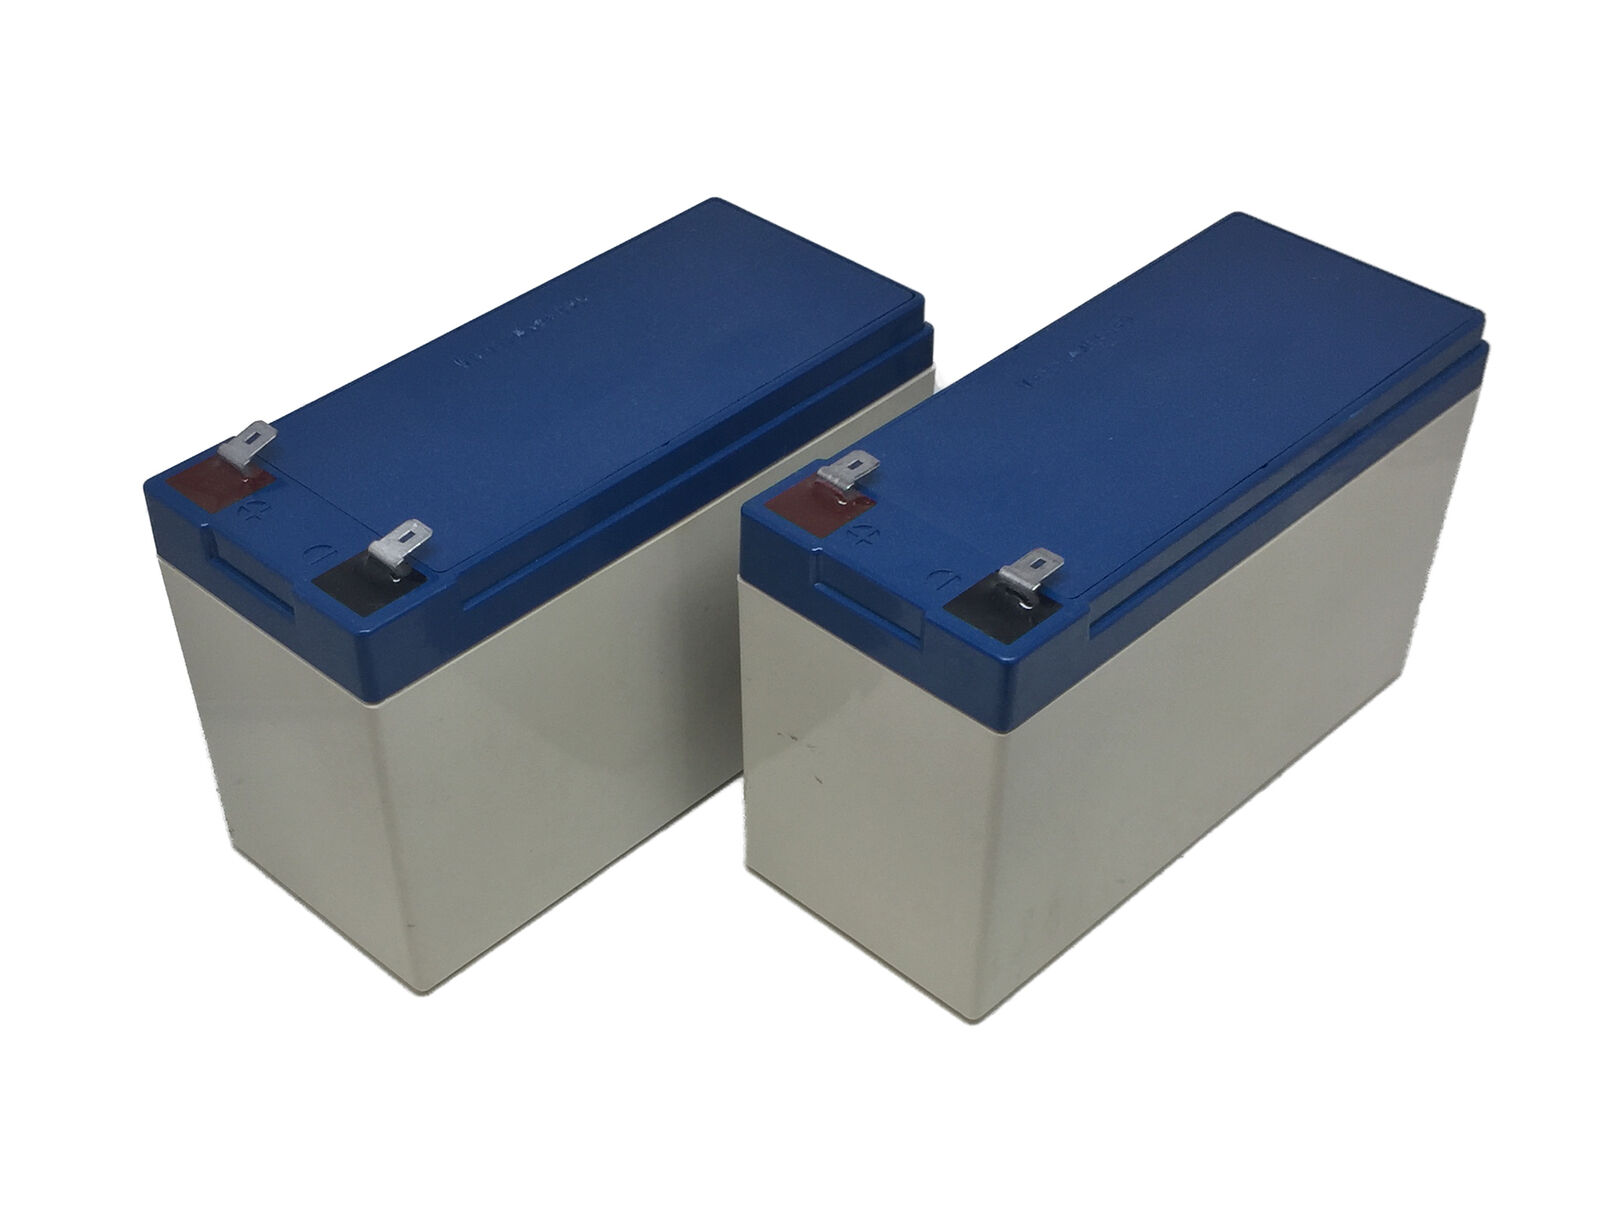 Belkin F6C800-UNV Battery Kit - 2 Pack 12V 7AH, fits F6C1272-BAT, F6C1500-TW-RK